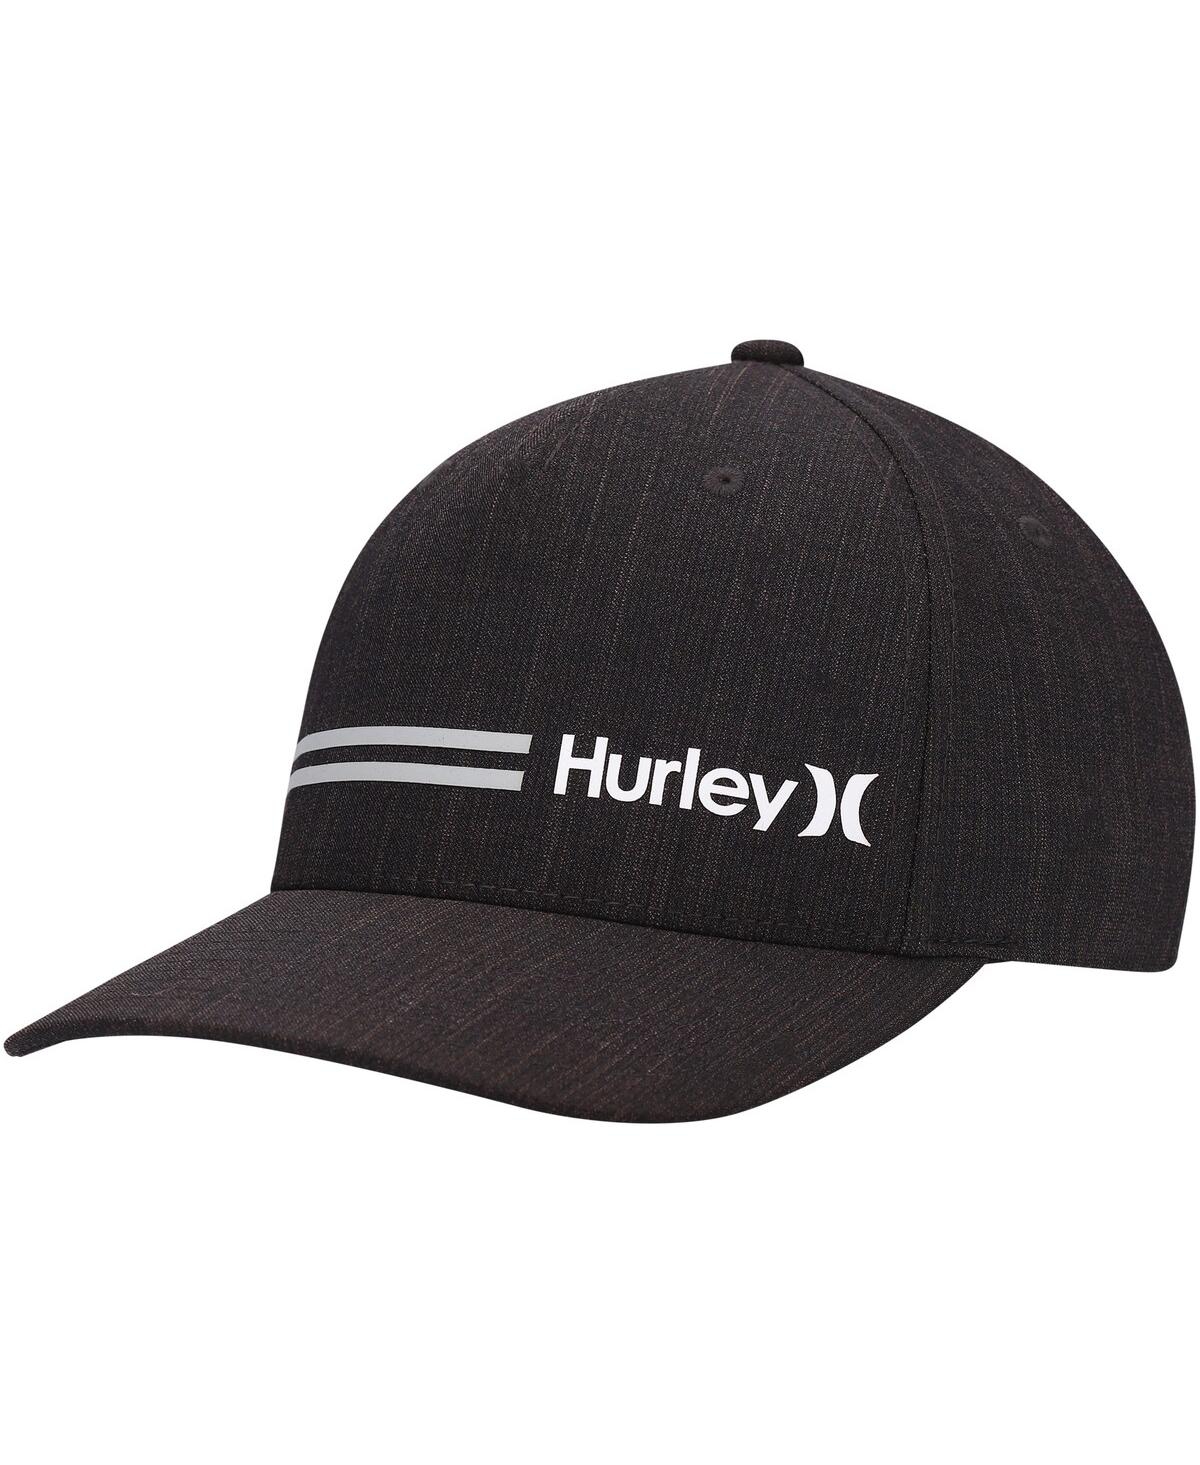 Hurley Men's  Black H20-dri Line Up Flex Hat